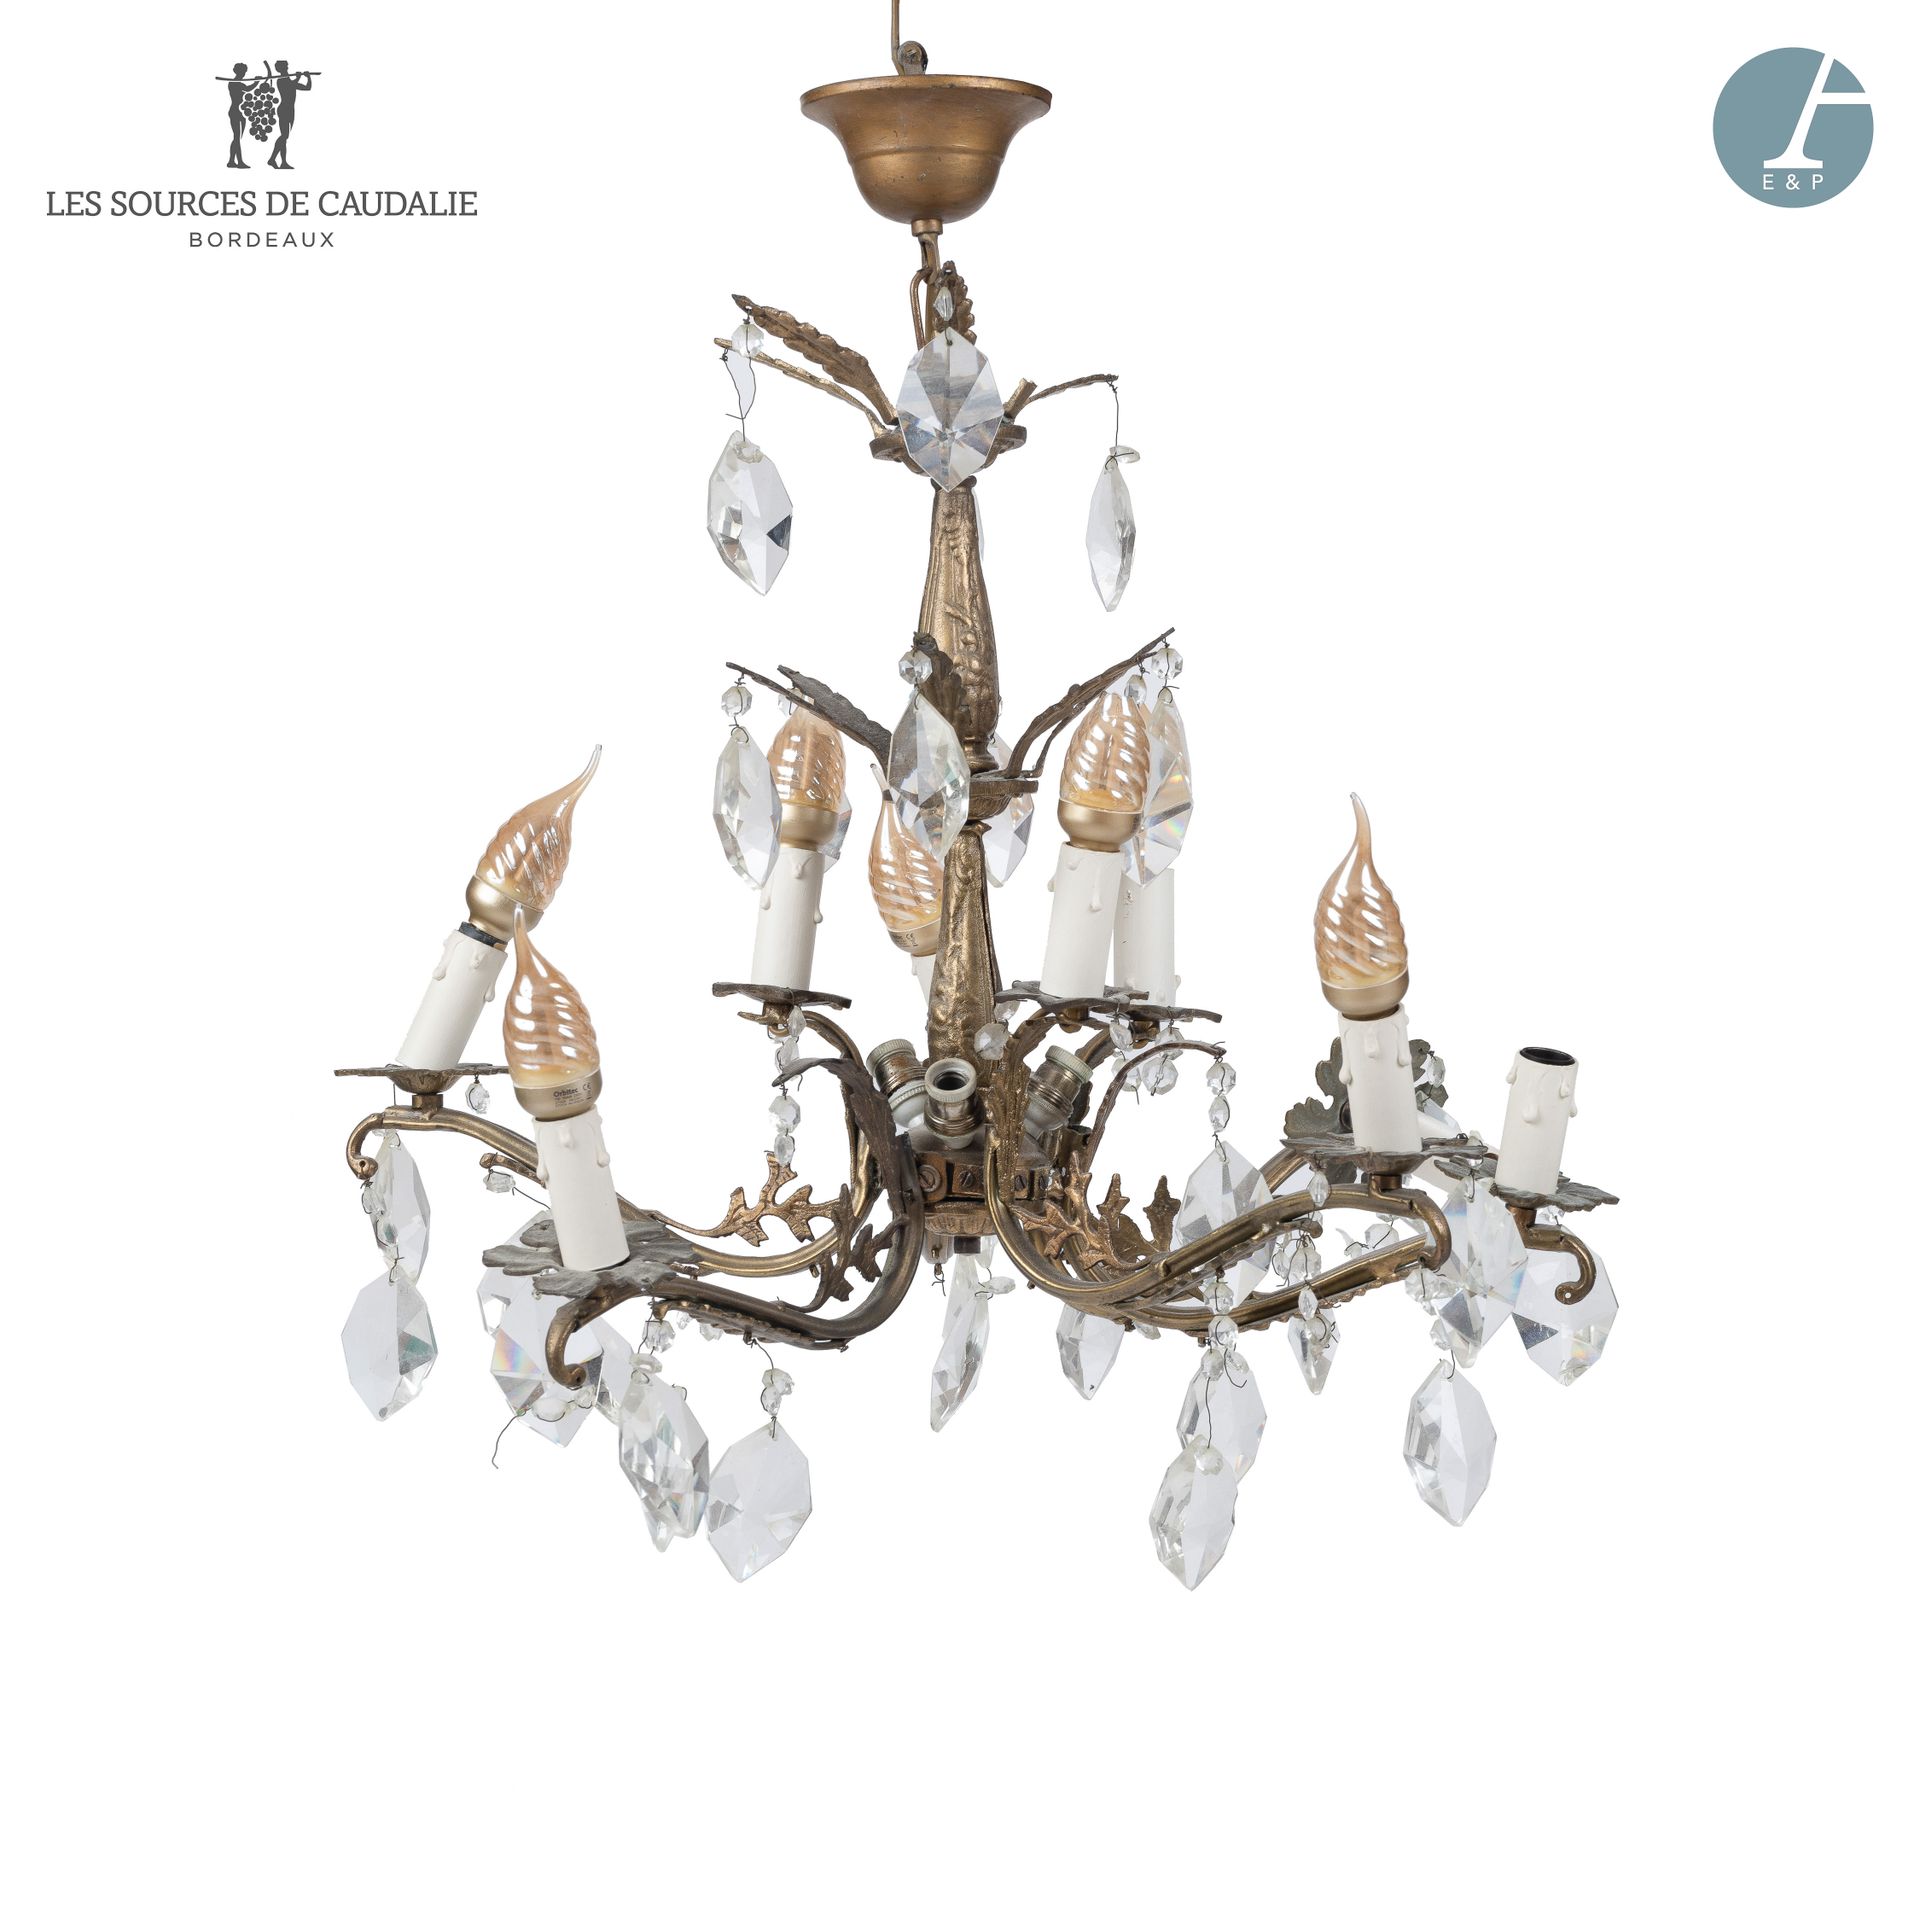 Null From the Sources de Caudalie
Gilded bronze chandelier with twelve lights, d&hellip;